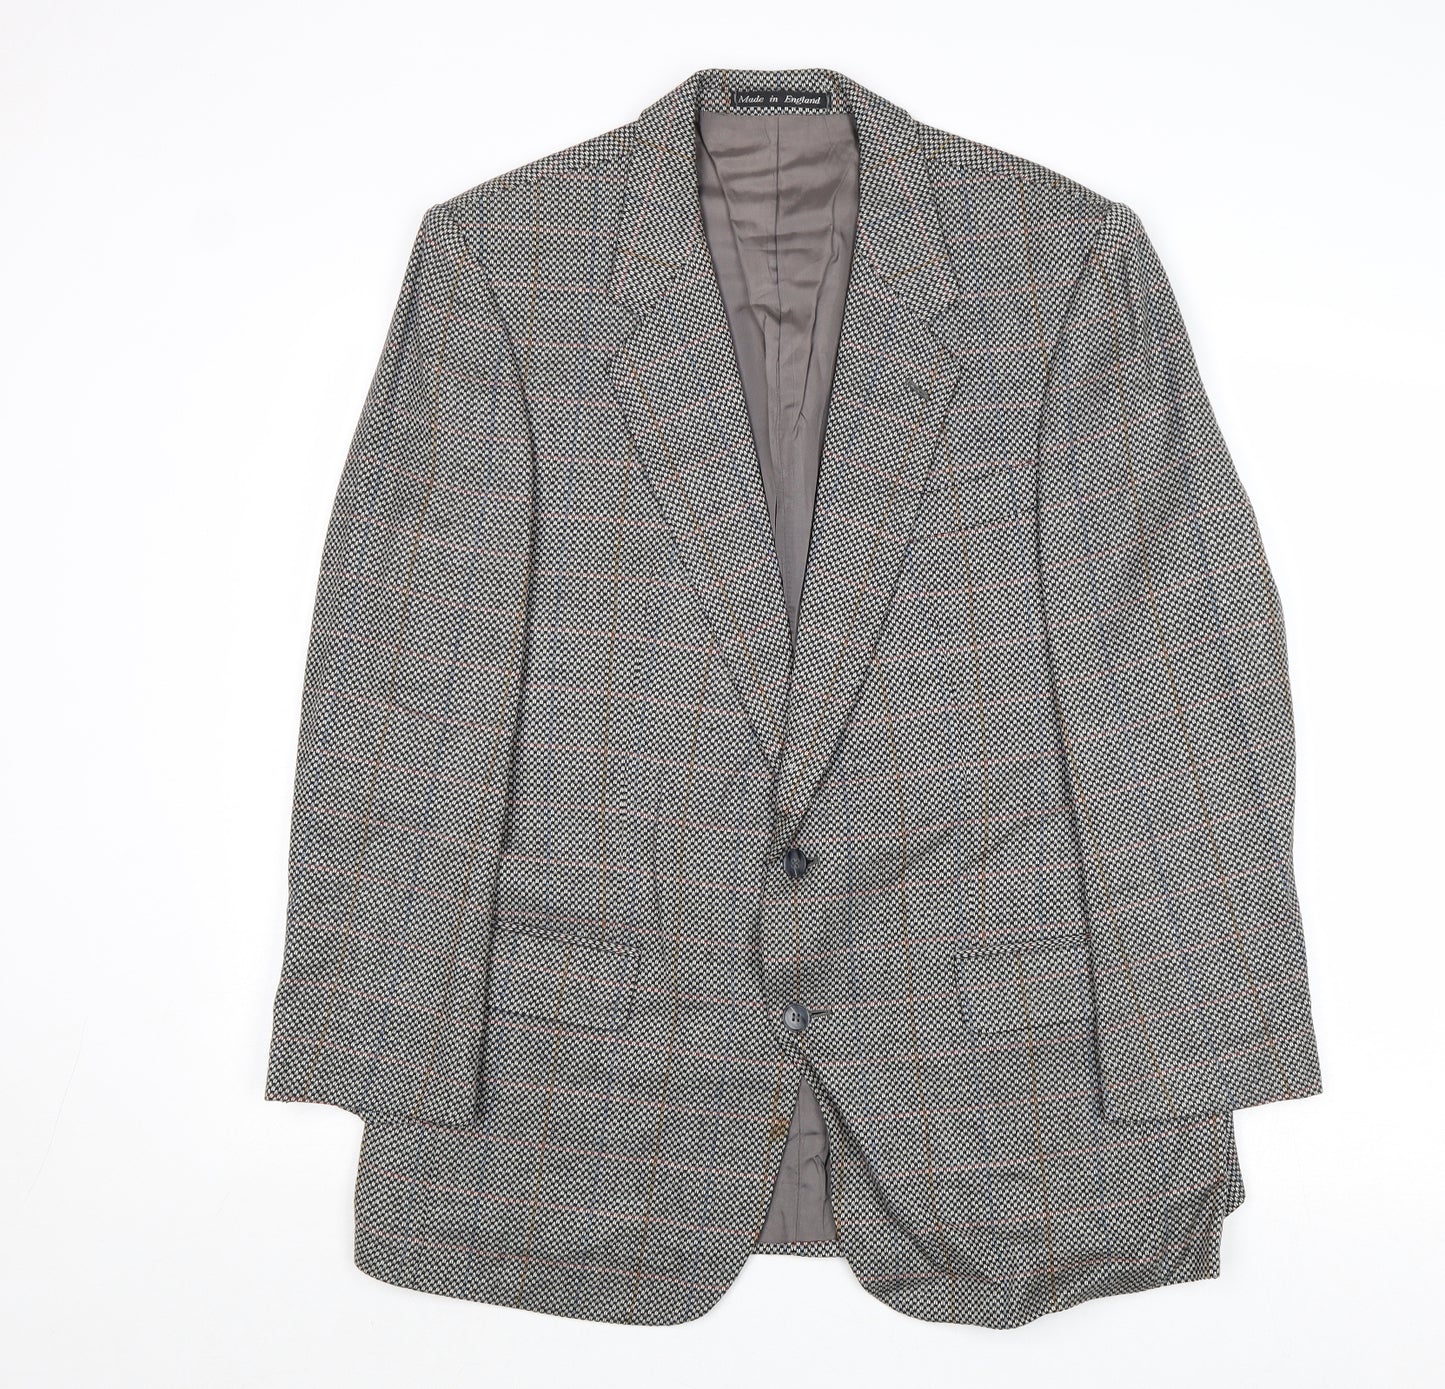 Berwin Mens Grey Wool Jacket Suit Jacket Size 42 Regular